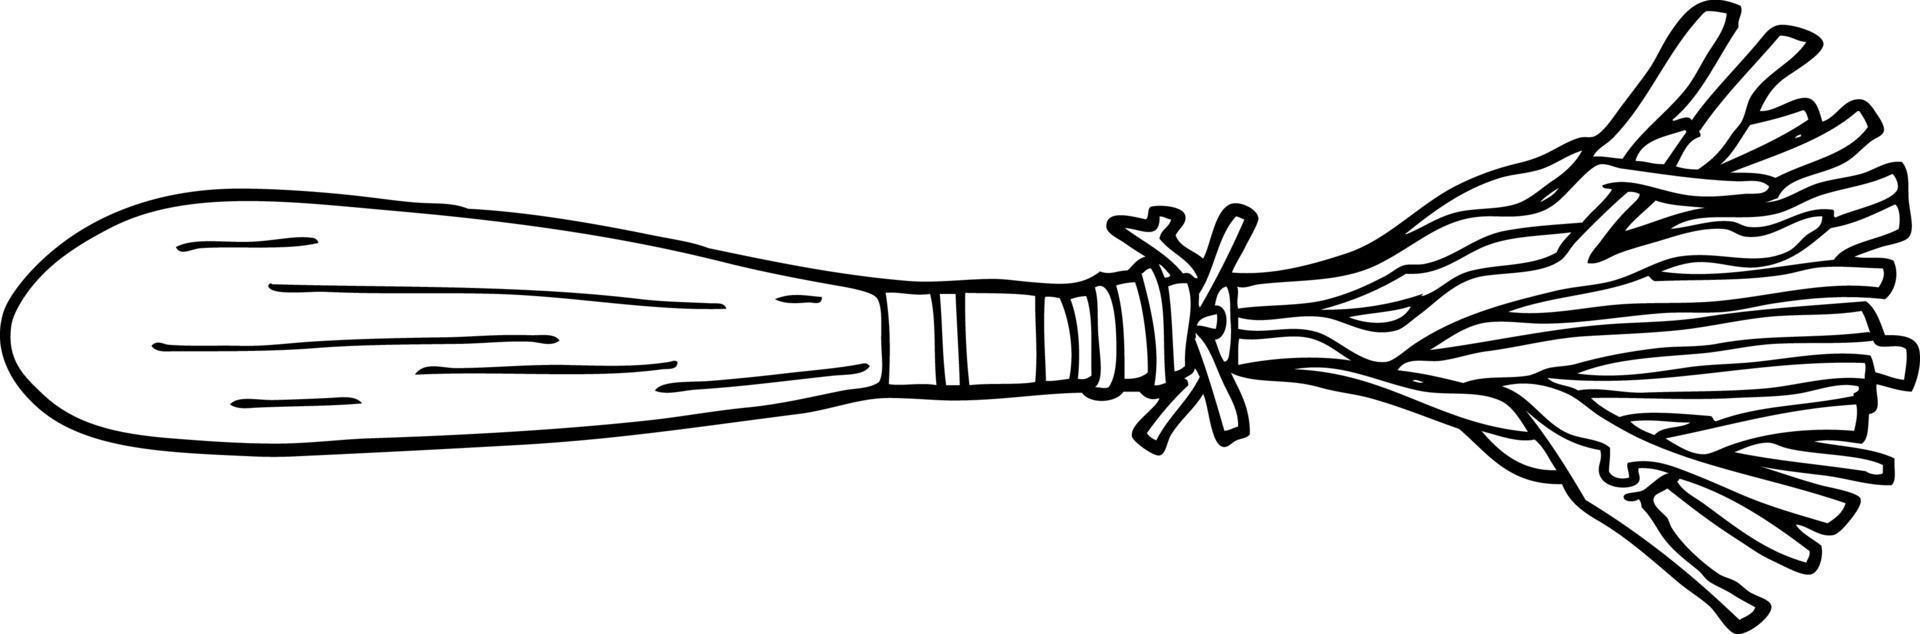 line drawing cartoon magic broom sticks vector